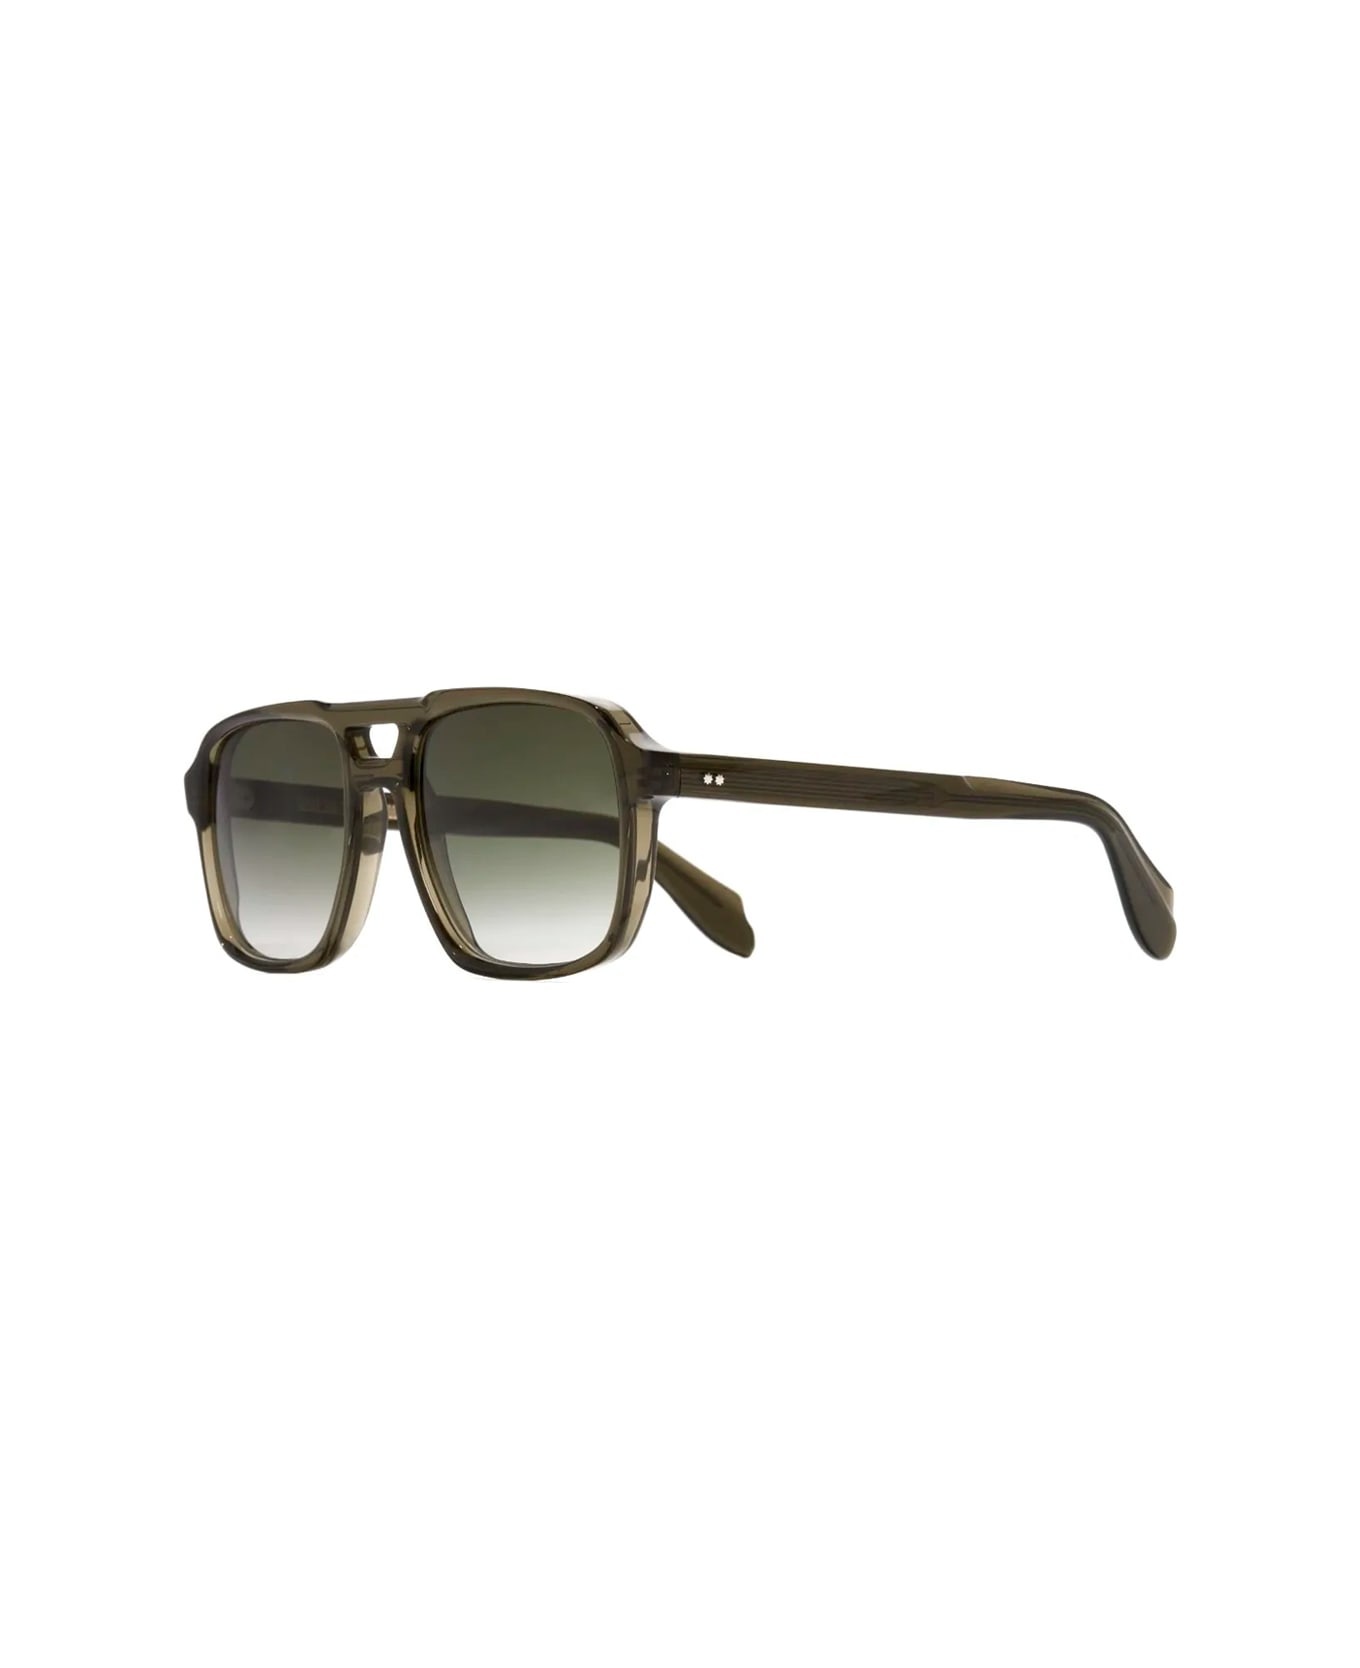 Cutler and Gross 1394 09 Sunglasses - Verde サングラス